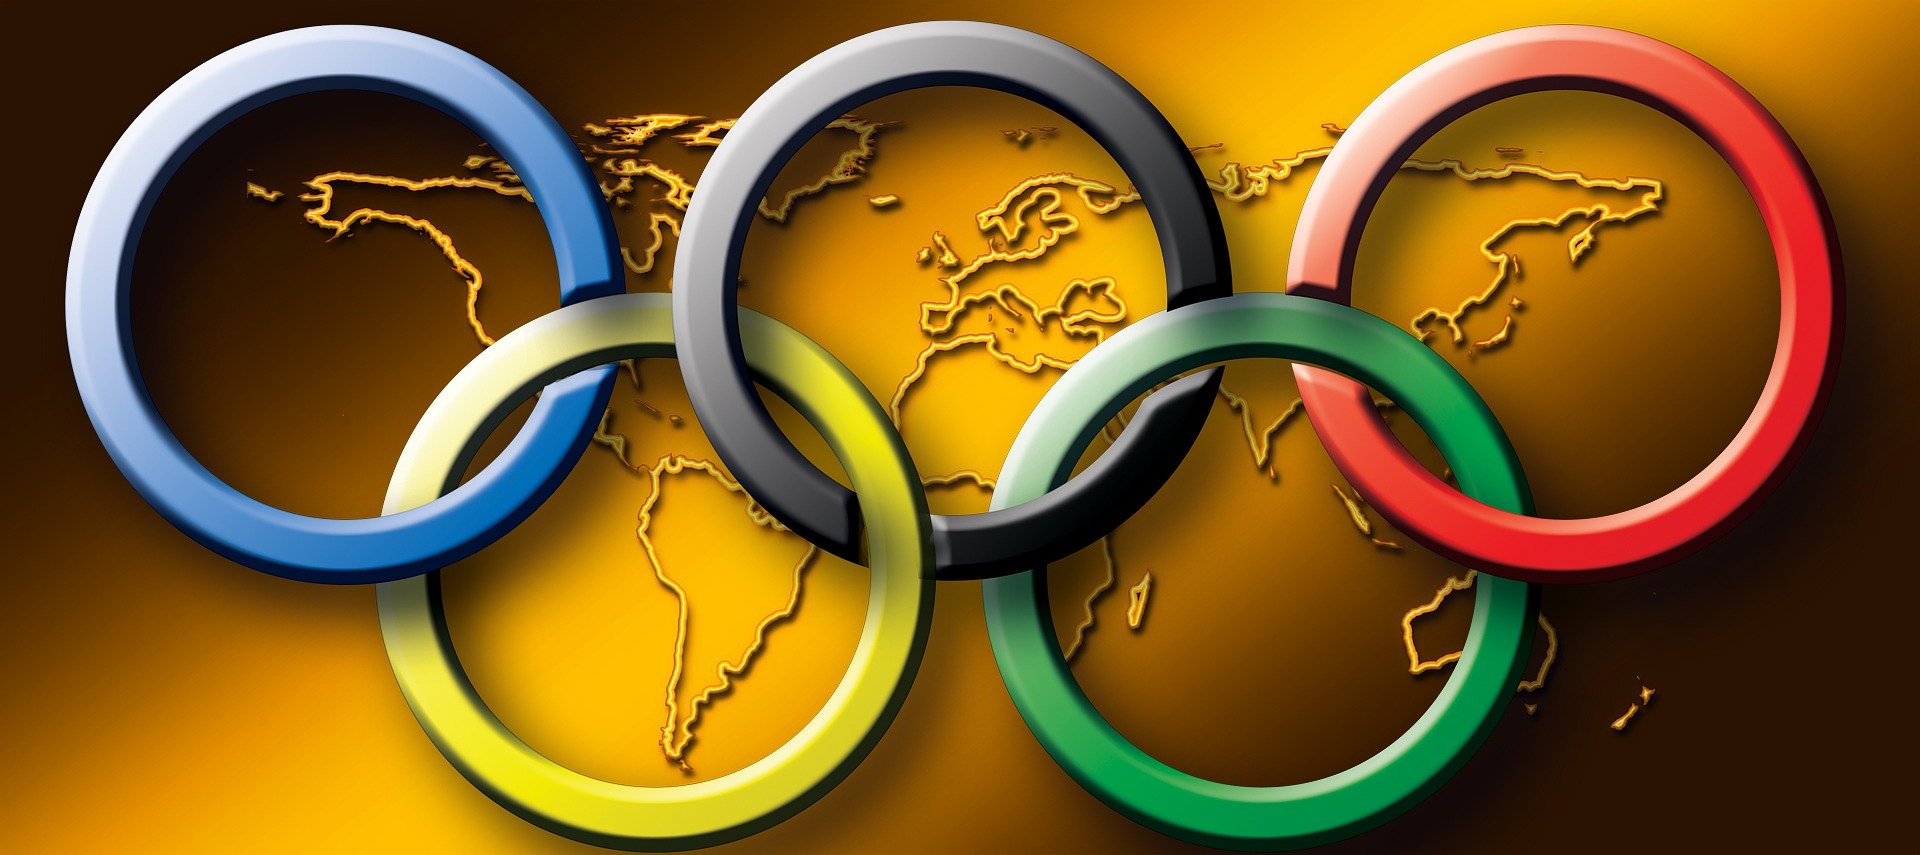 olimpics logo